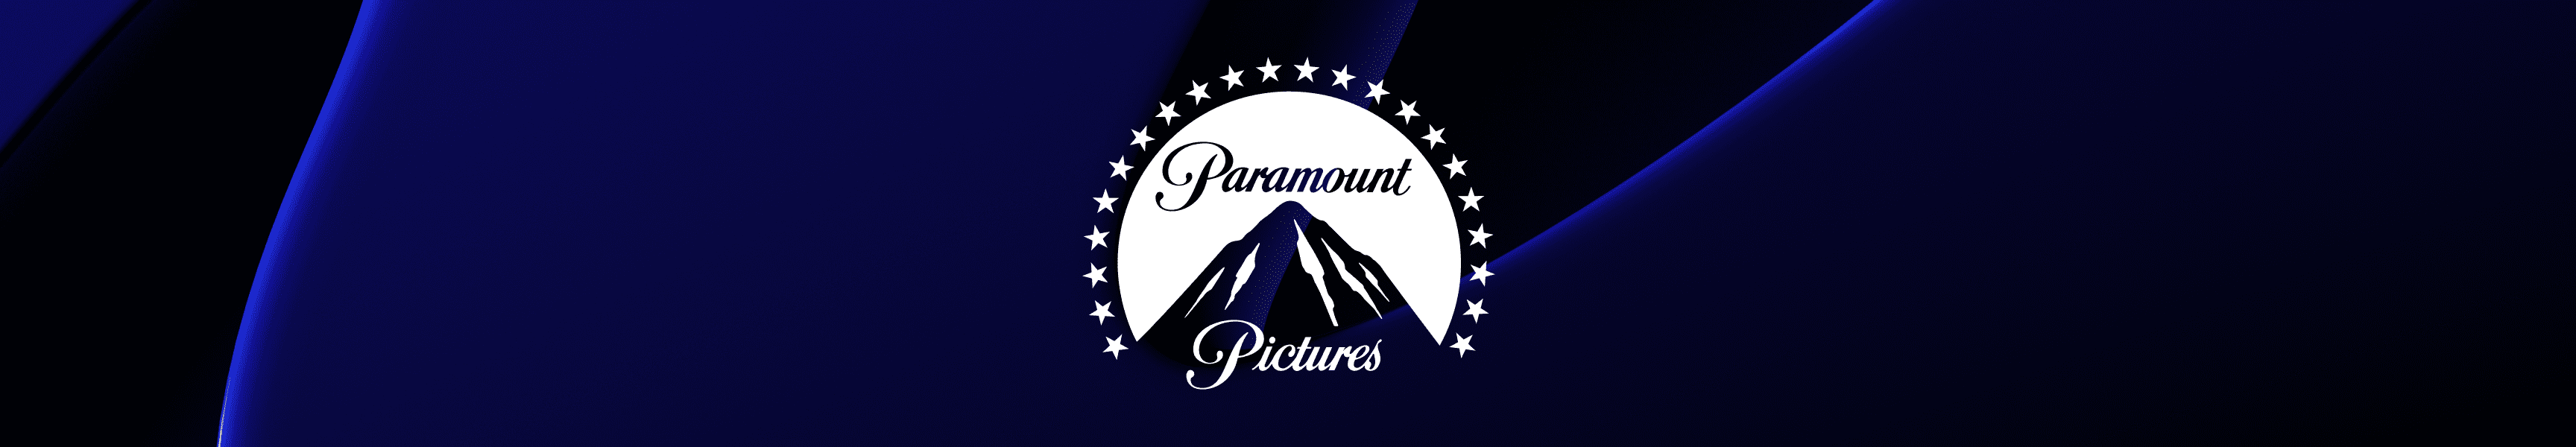 Paramount Pictures Hoodies & Sweatshirts